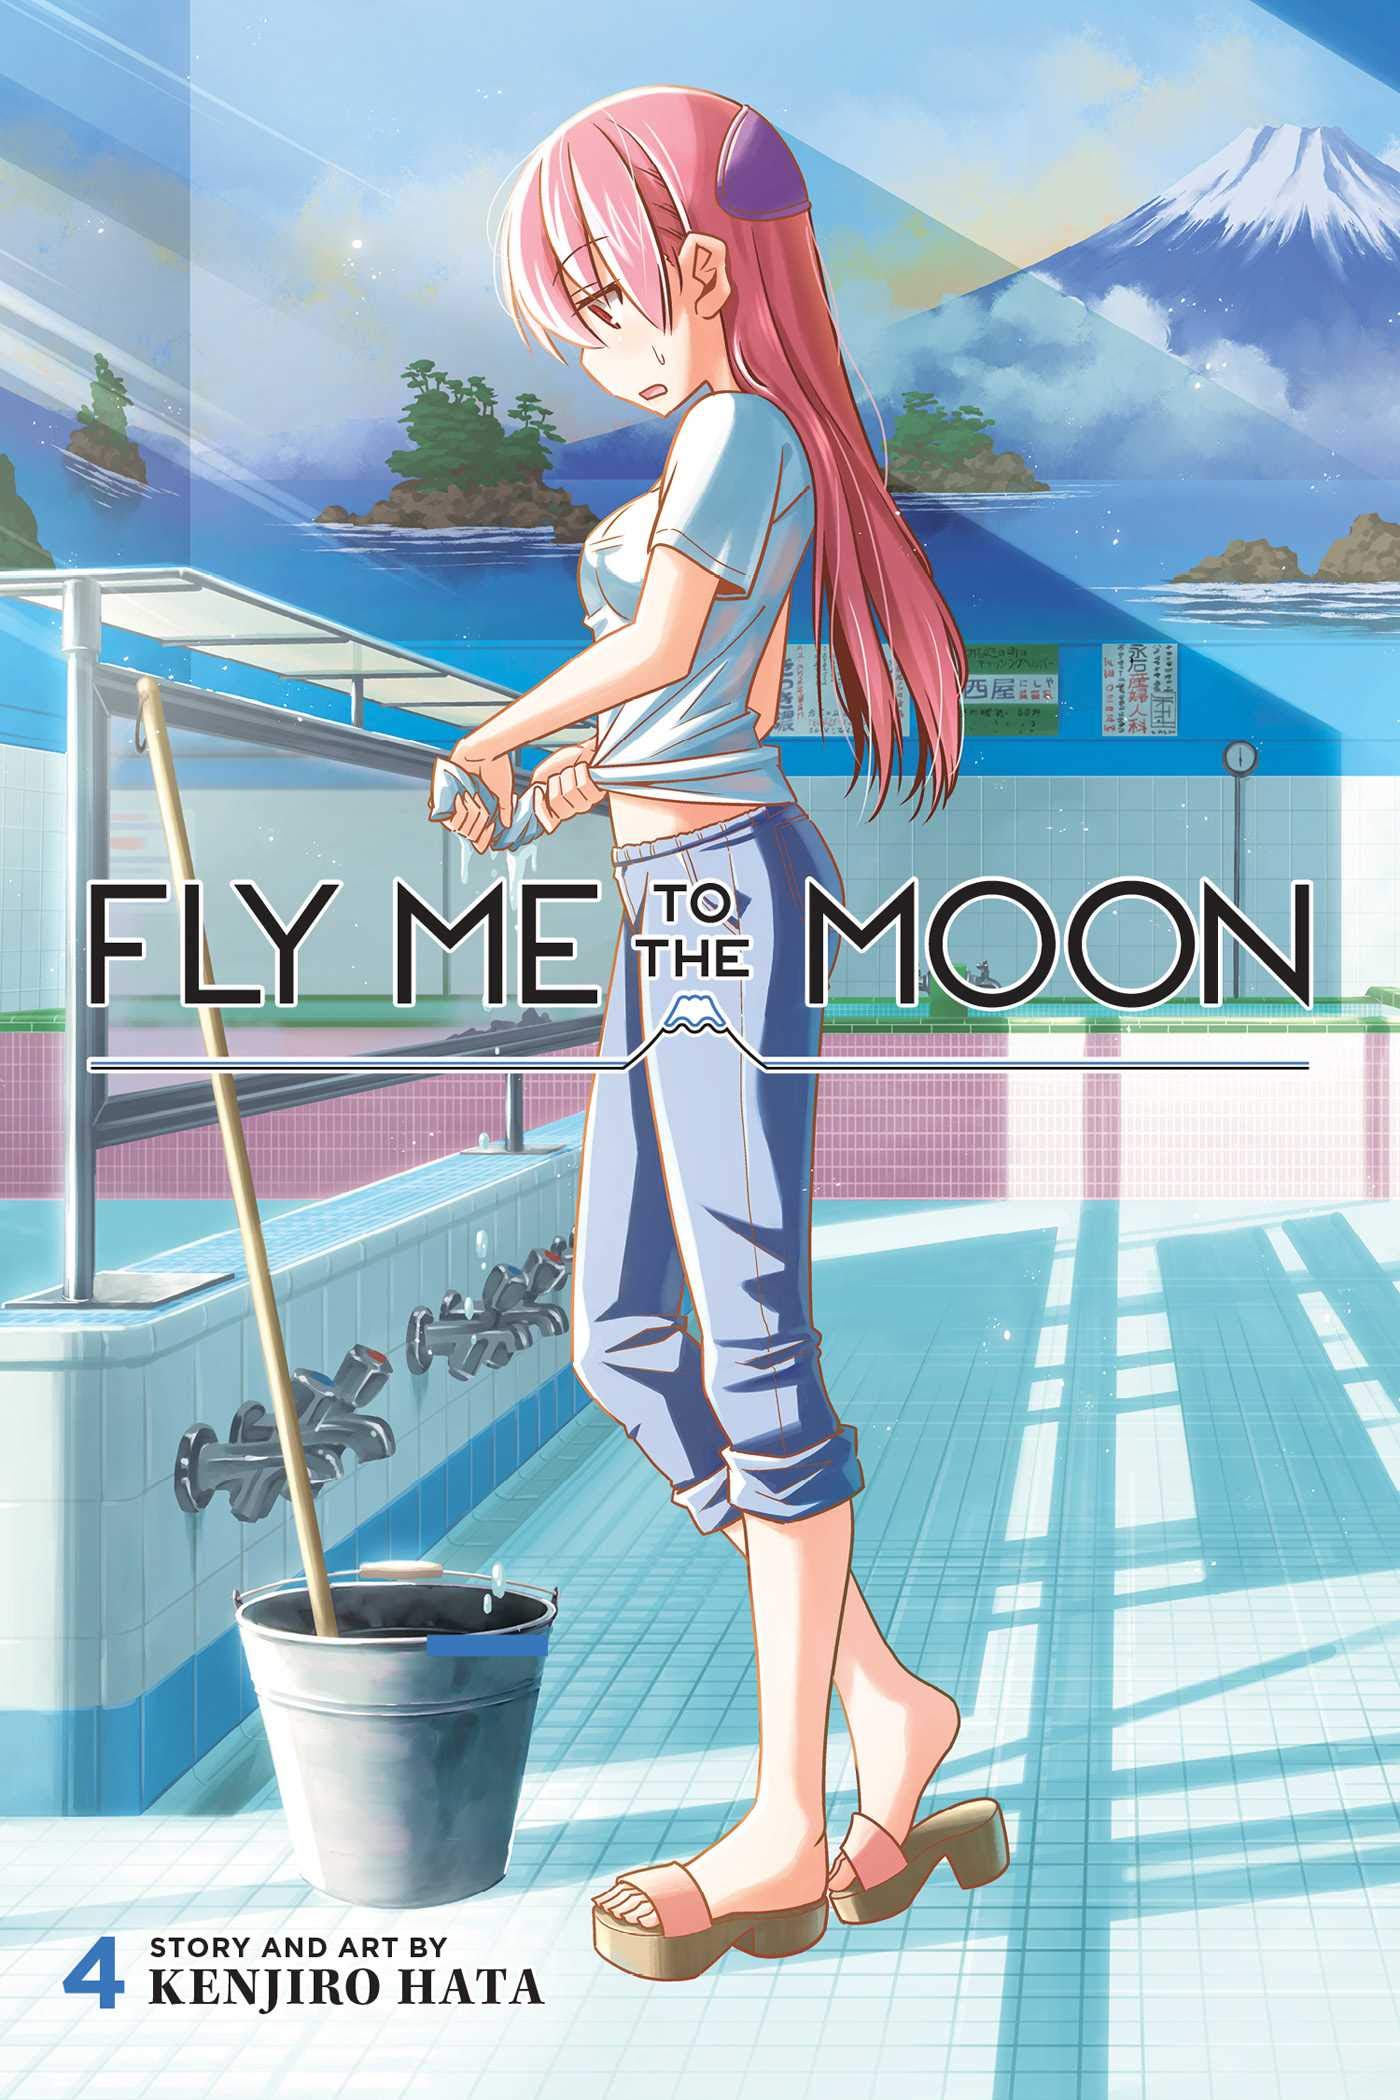 MANGA REVIEW "Fly Me to the Moon" Volume Four B3 The Boston